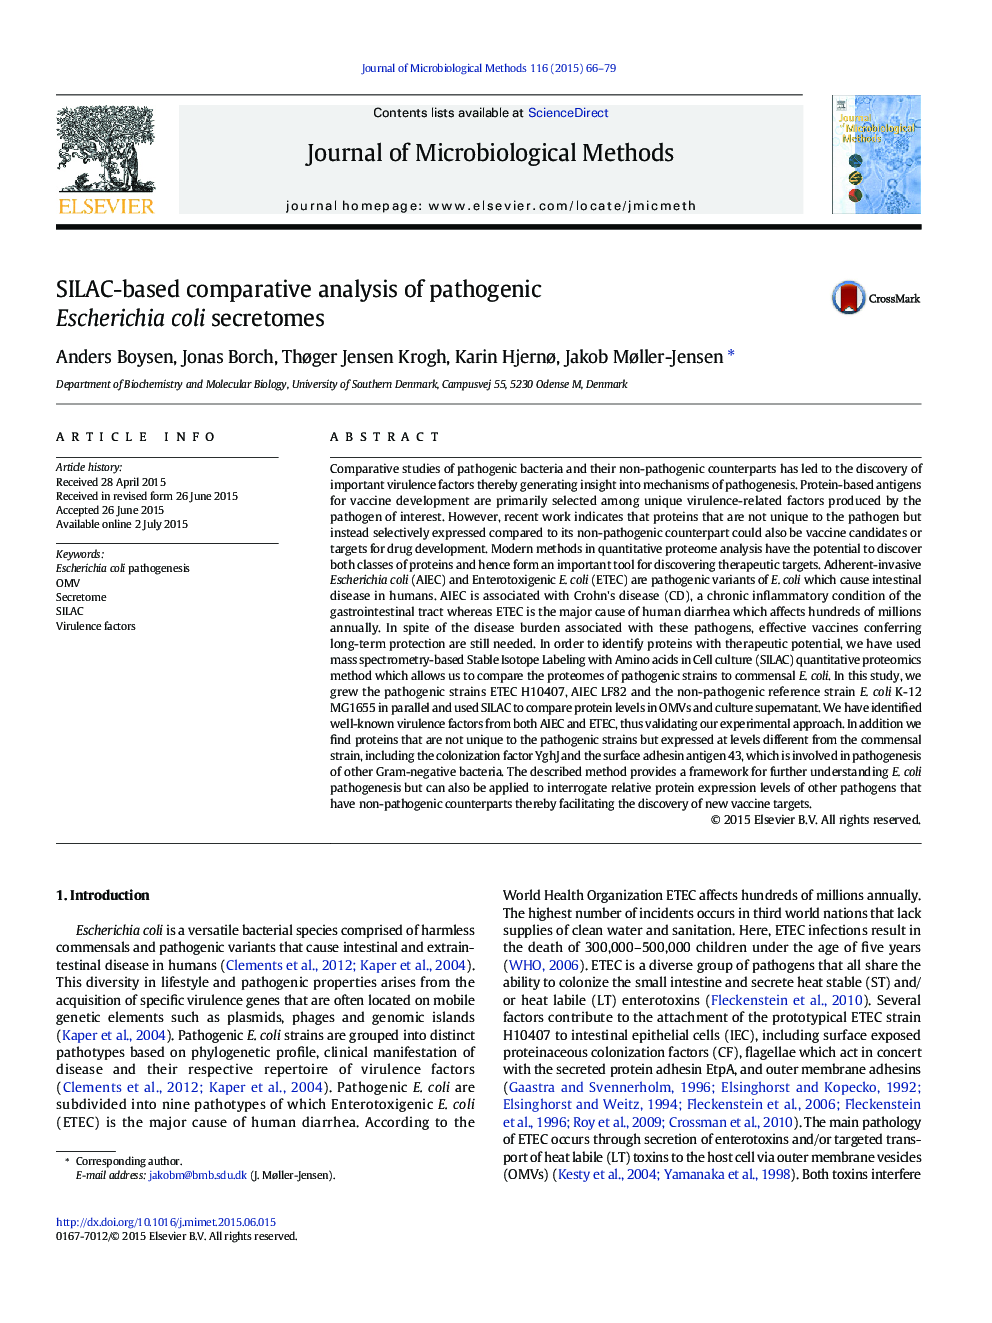 SILAC-based comparative analysis of pathogenic Escherichia coli secretomes